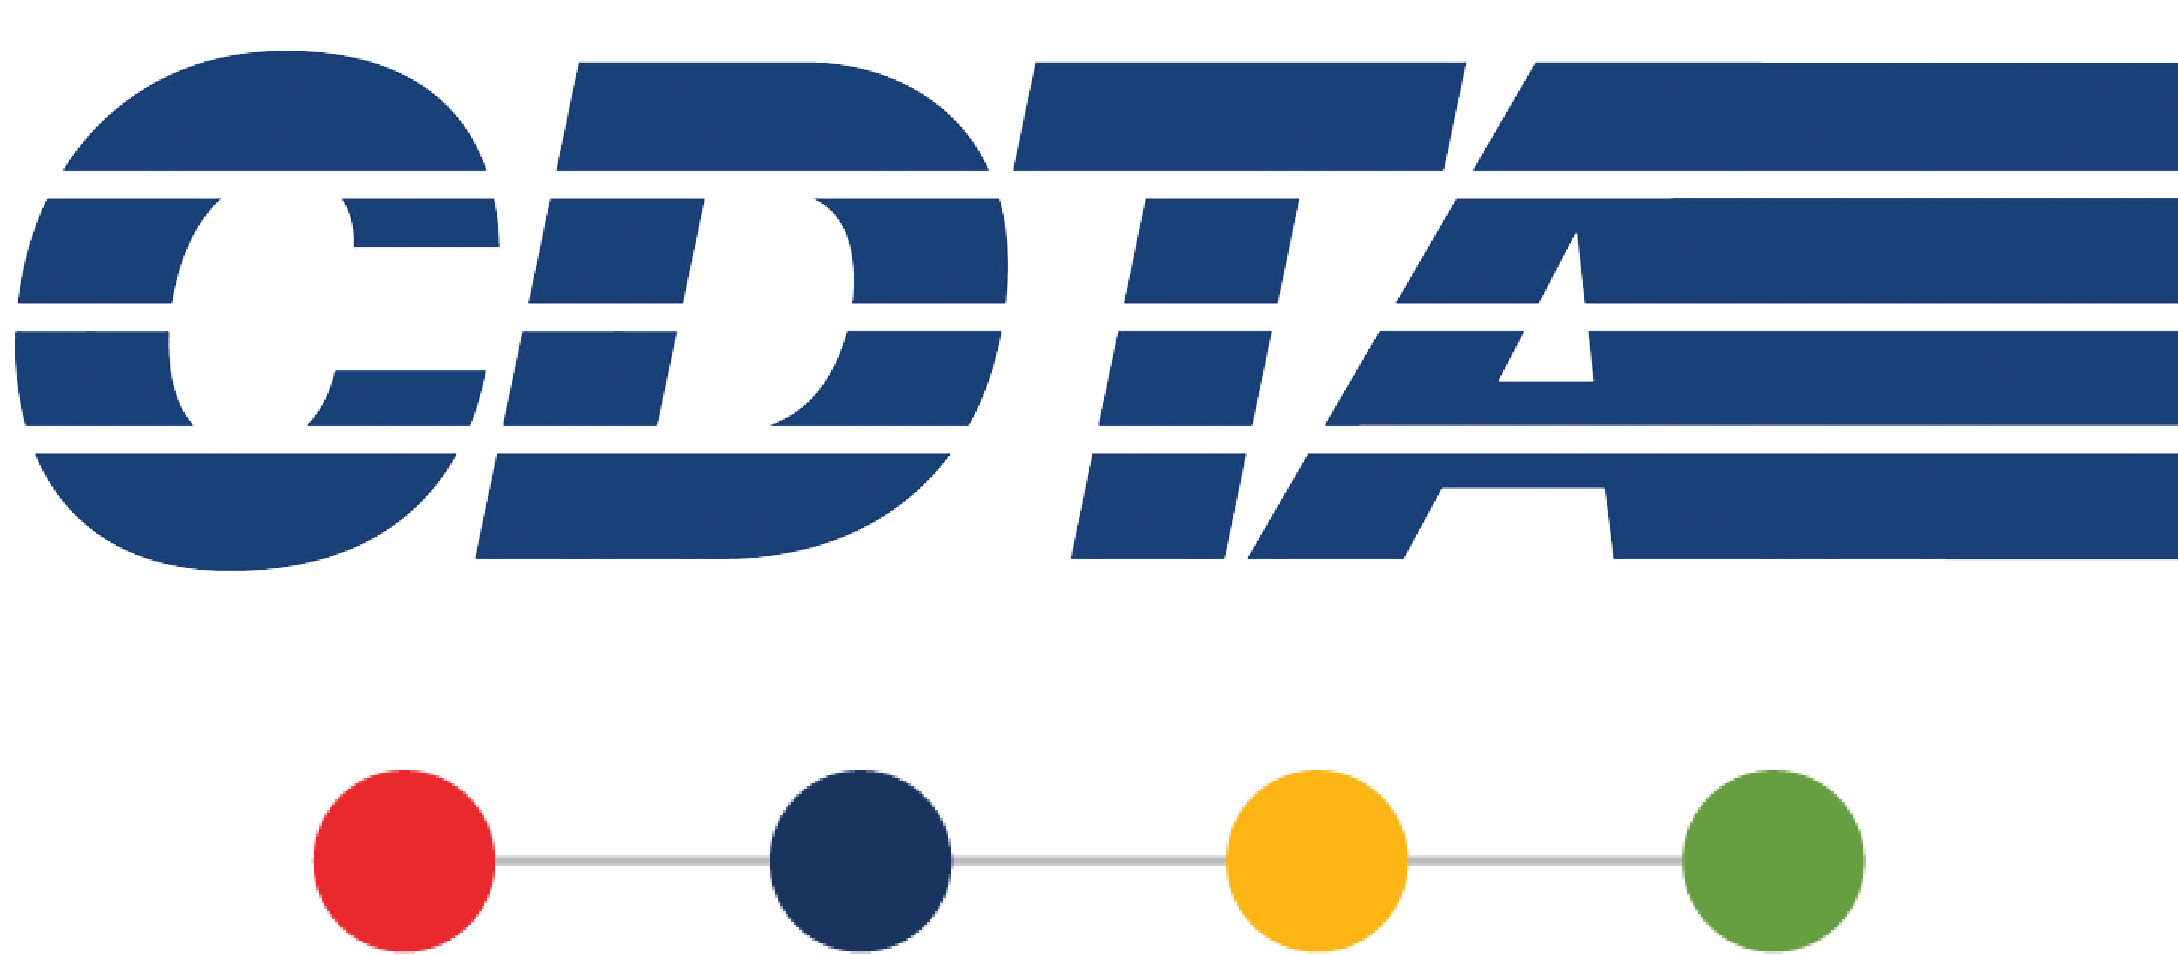 CDTA logo with Dots